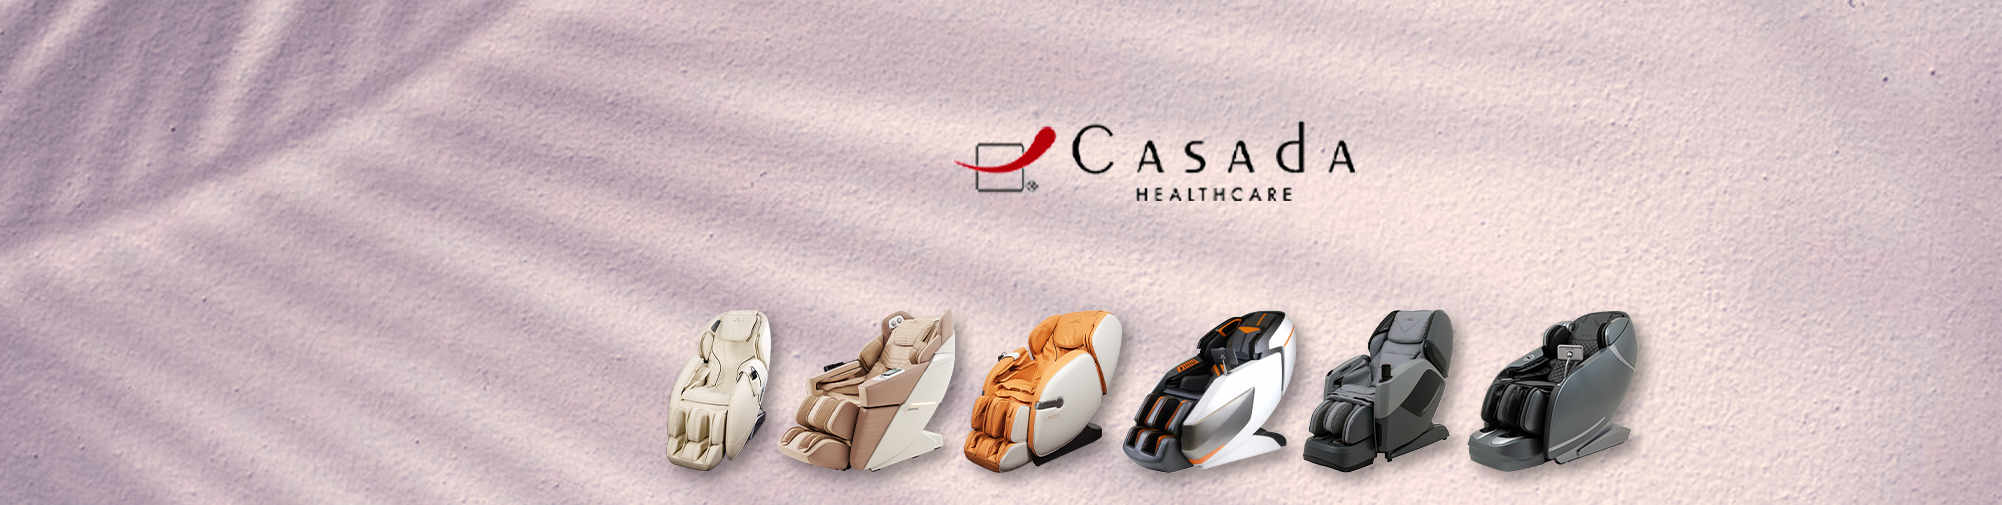 Casada - zouverlässeg Partner | Massage Stull Welt